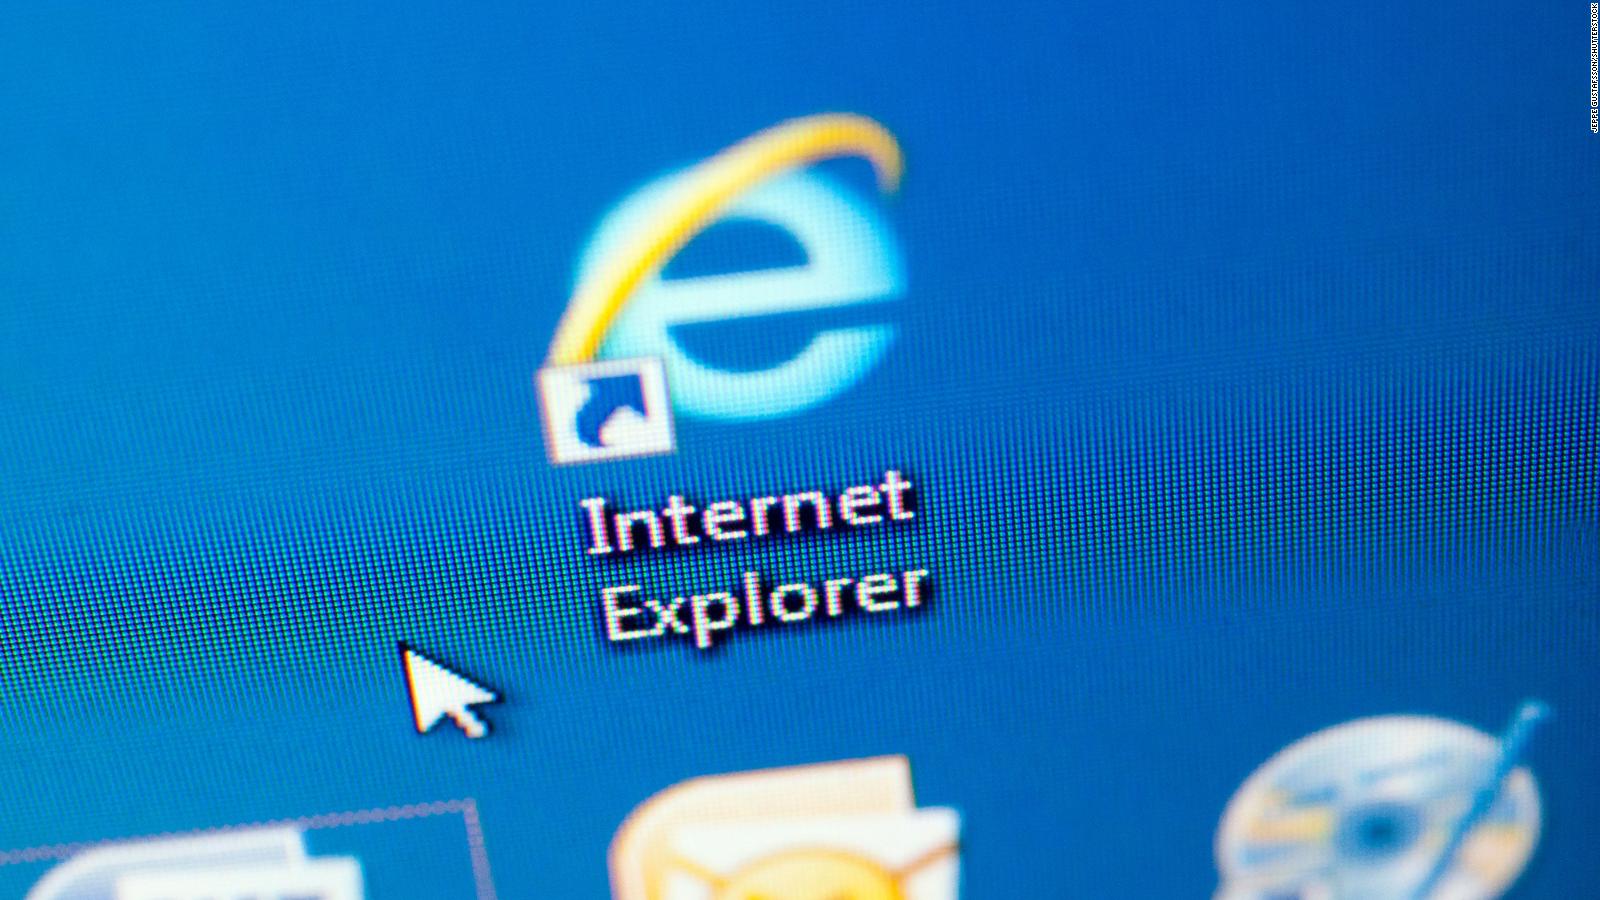 Microsoft retires Internet Explorer -ccnespañol